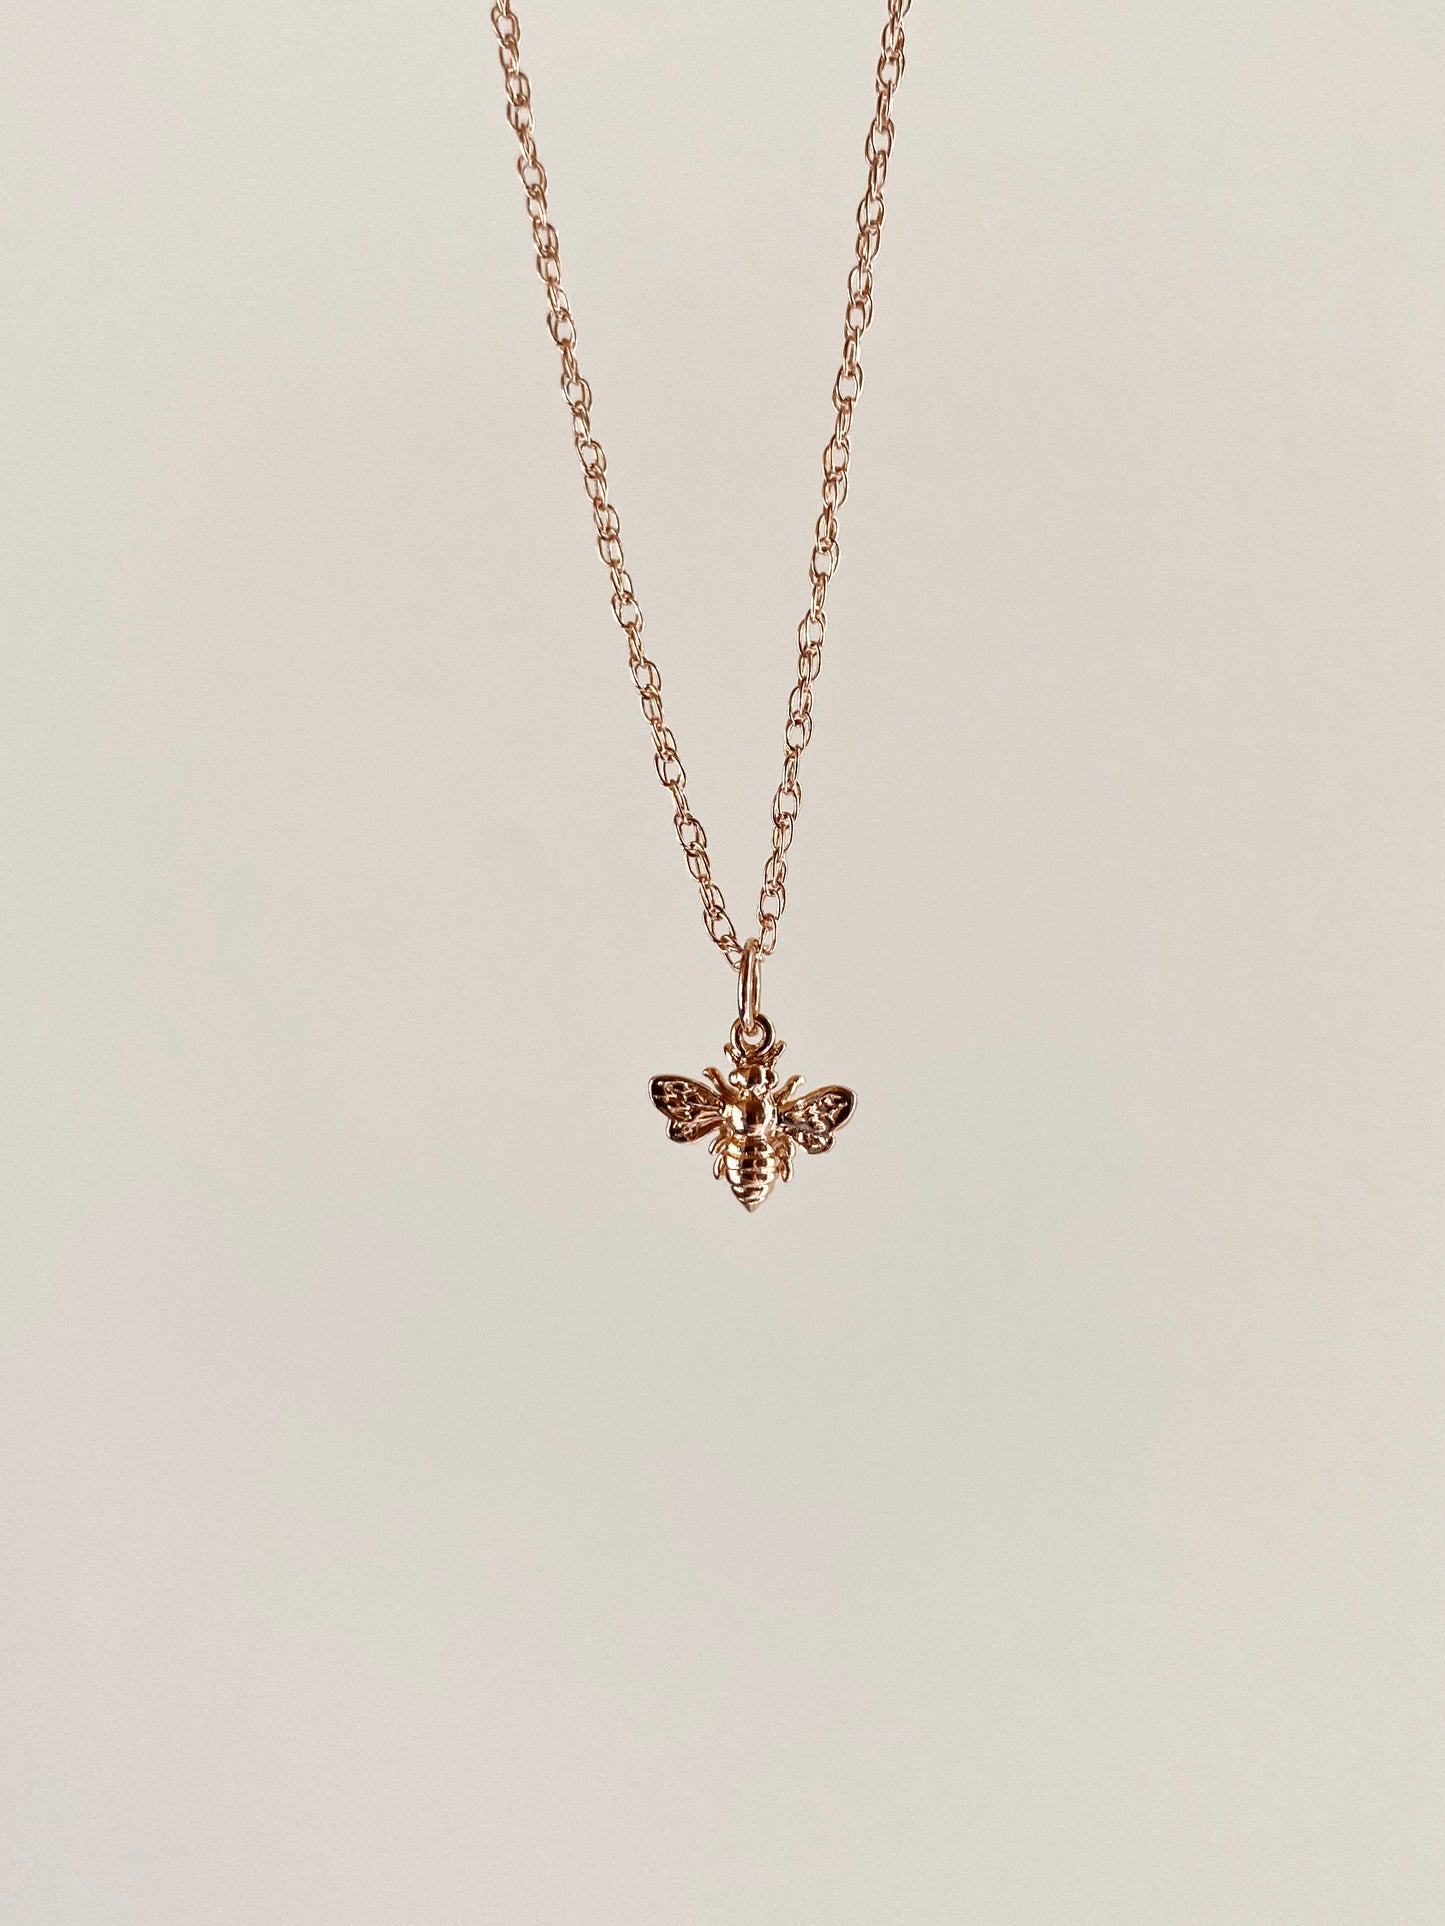 Honey Bee ~ 14K Rose Gold Fill Charm Necklace - Sacred Symbols Series